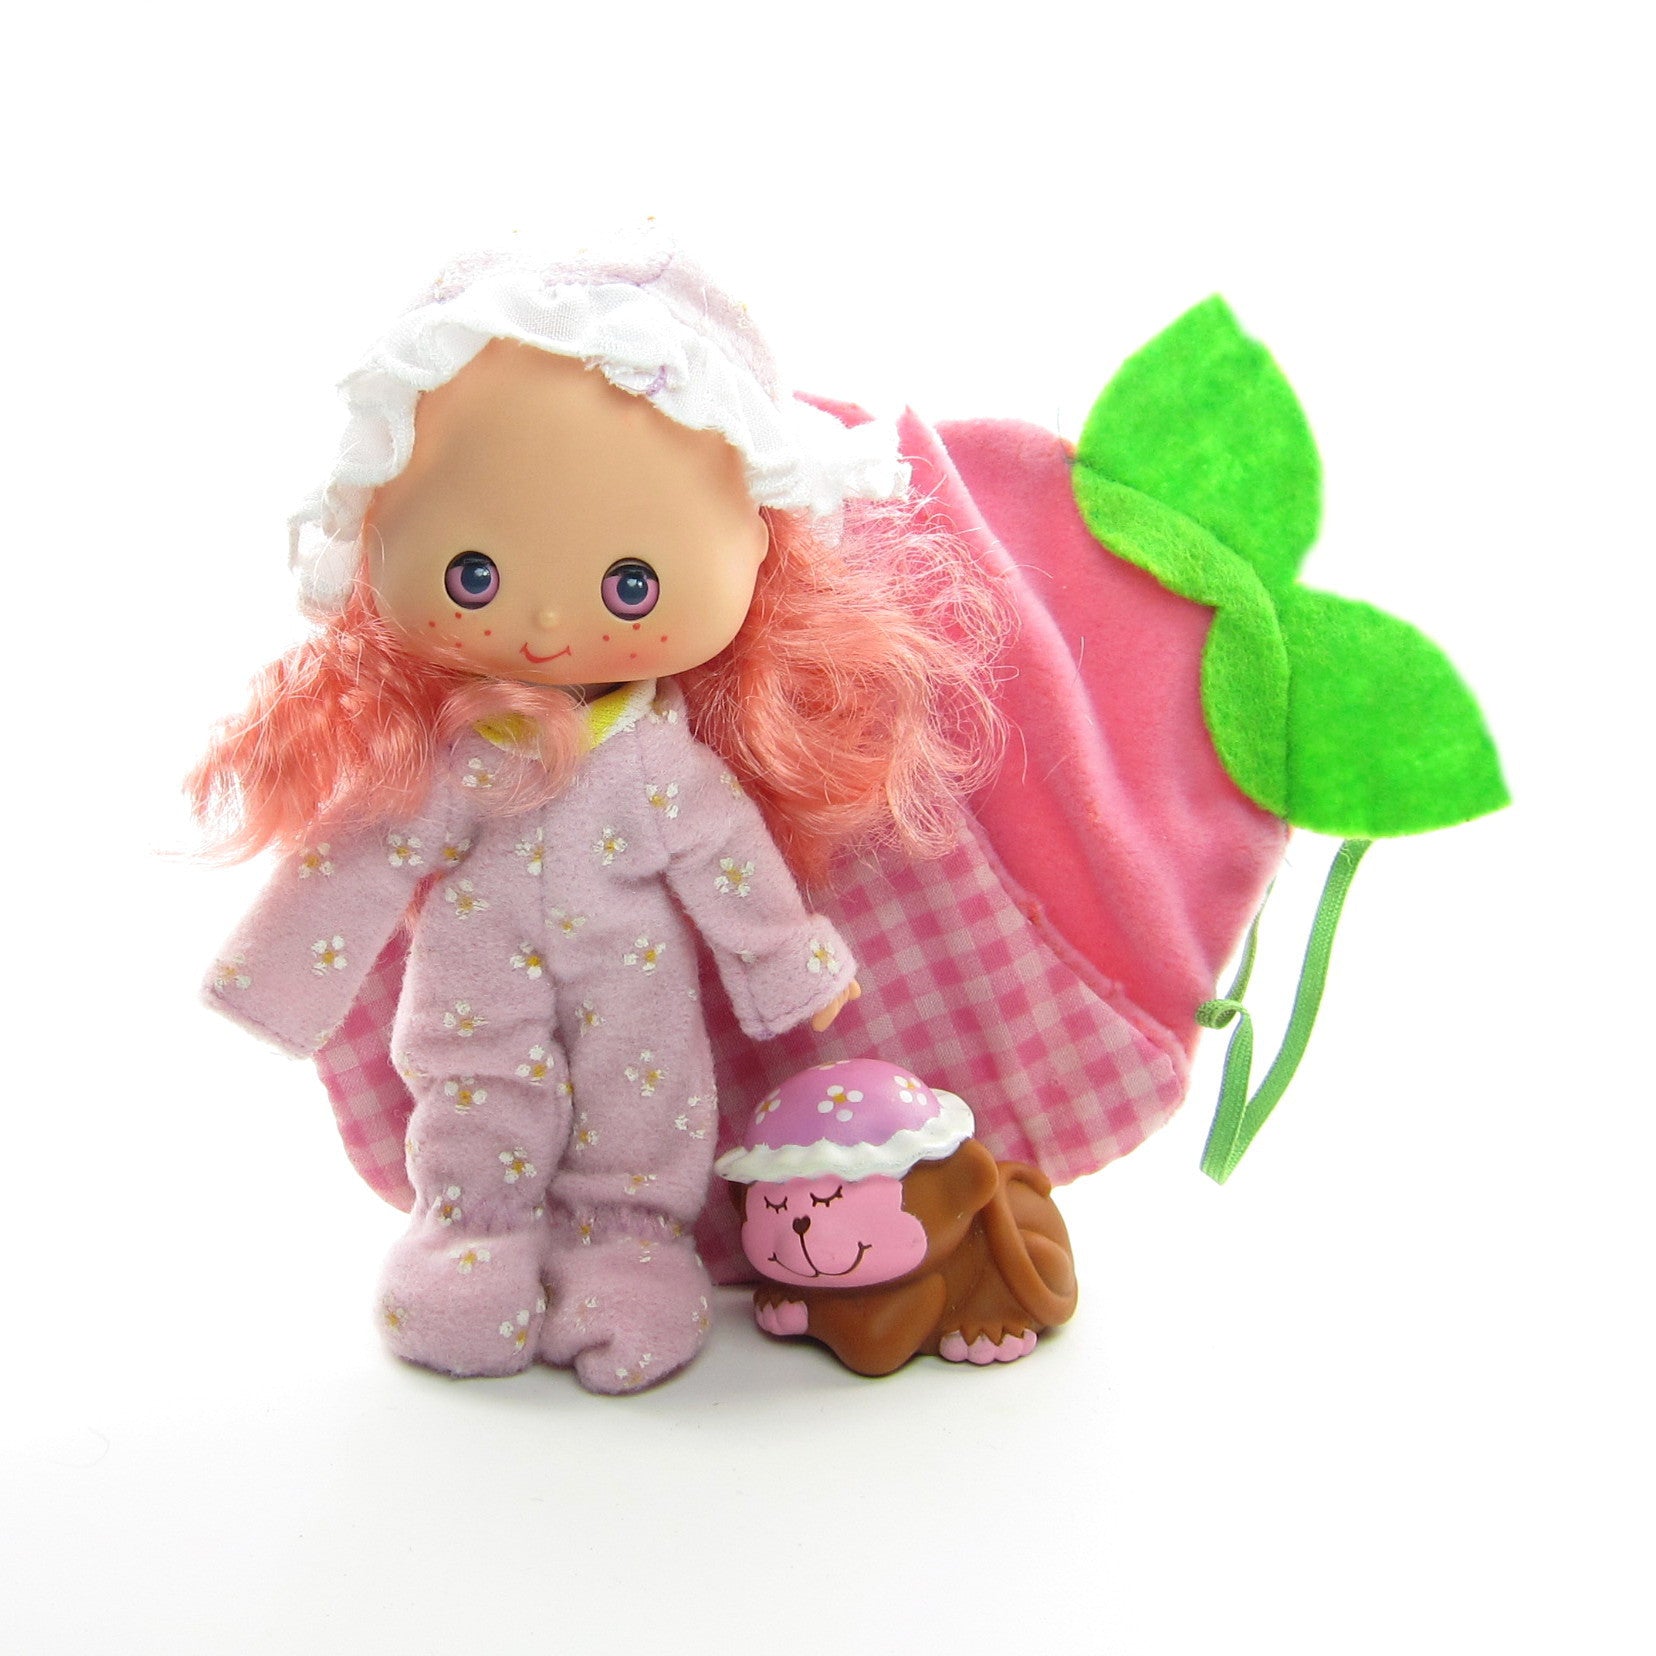 Raspberry Tart Sweet Sleeper doll with sleeping bag, Rhubarb pet